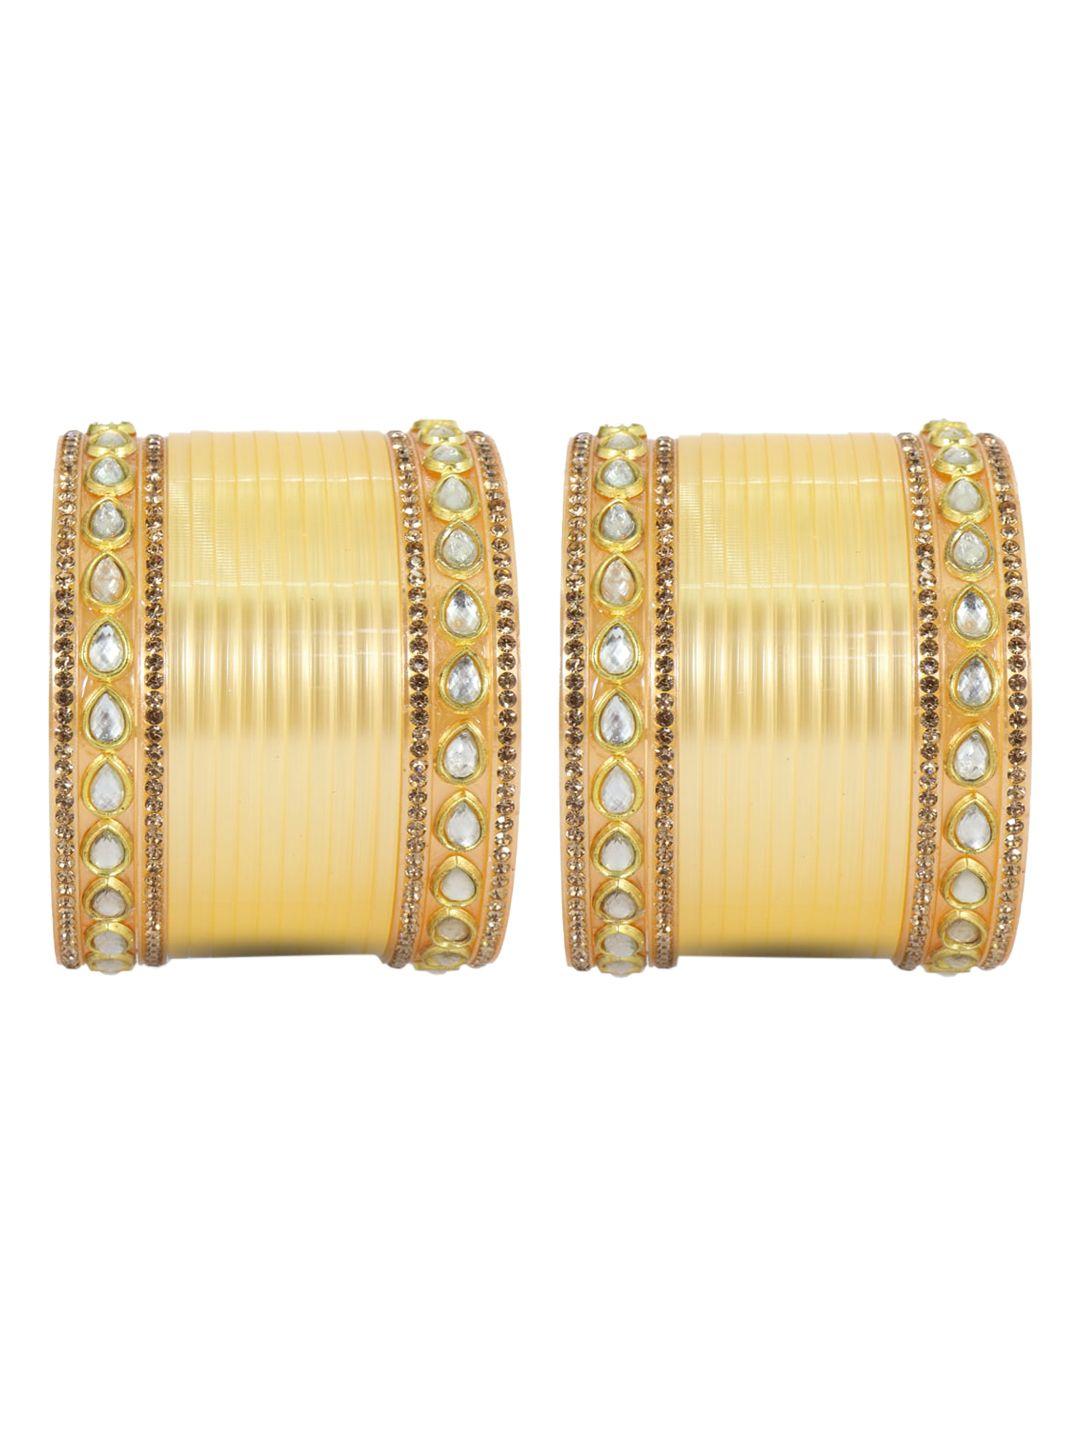 nmii set of 32 gold-plated zircon-studded bangles